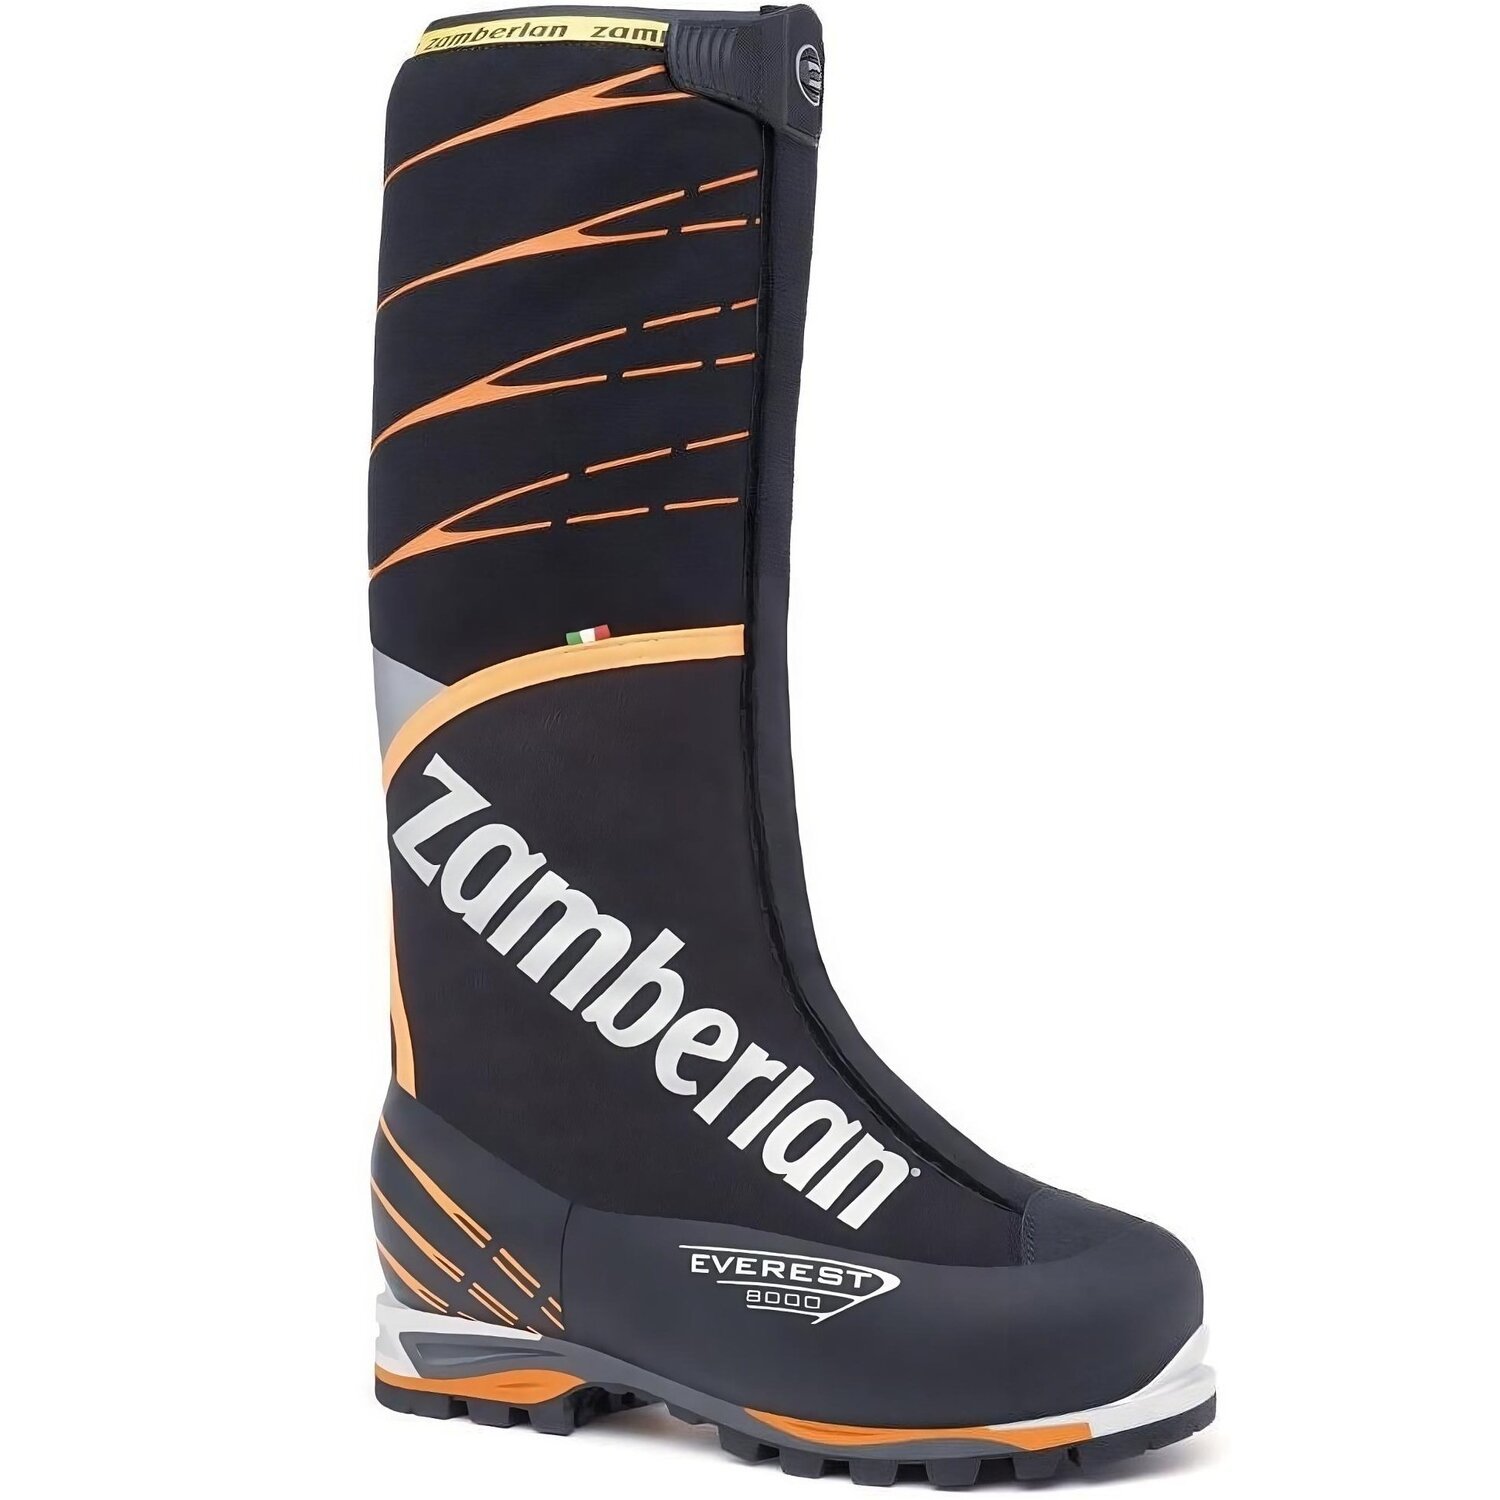 Ботинки Zamberlan 8000 Everest Evo RR black/orange 48 черный/оранжевый фото 